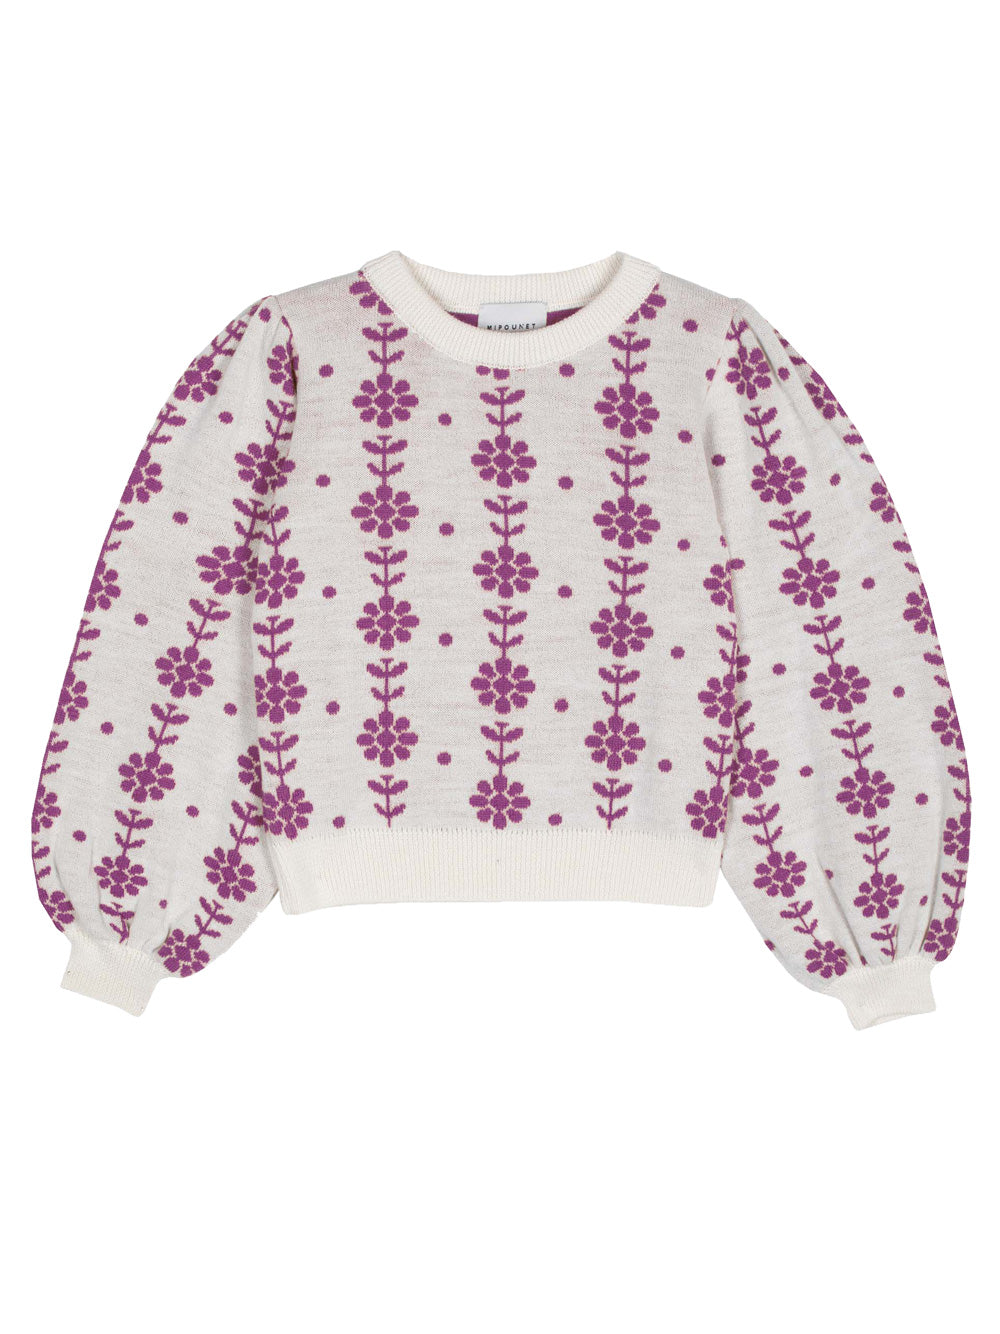 Wool Braided Flower Sweater